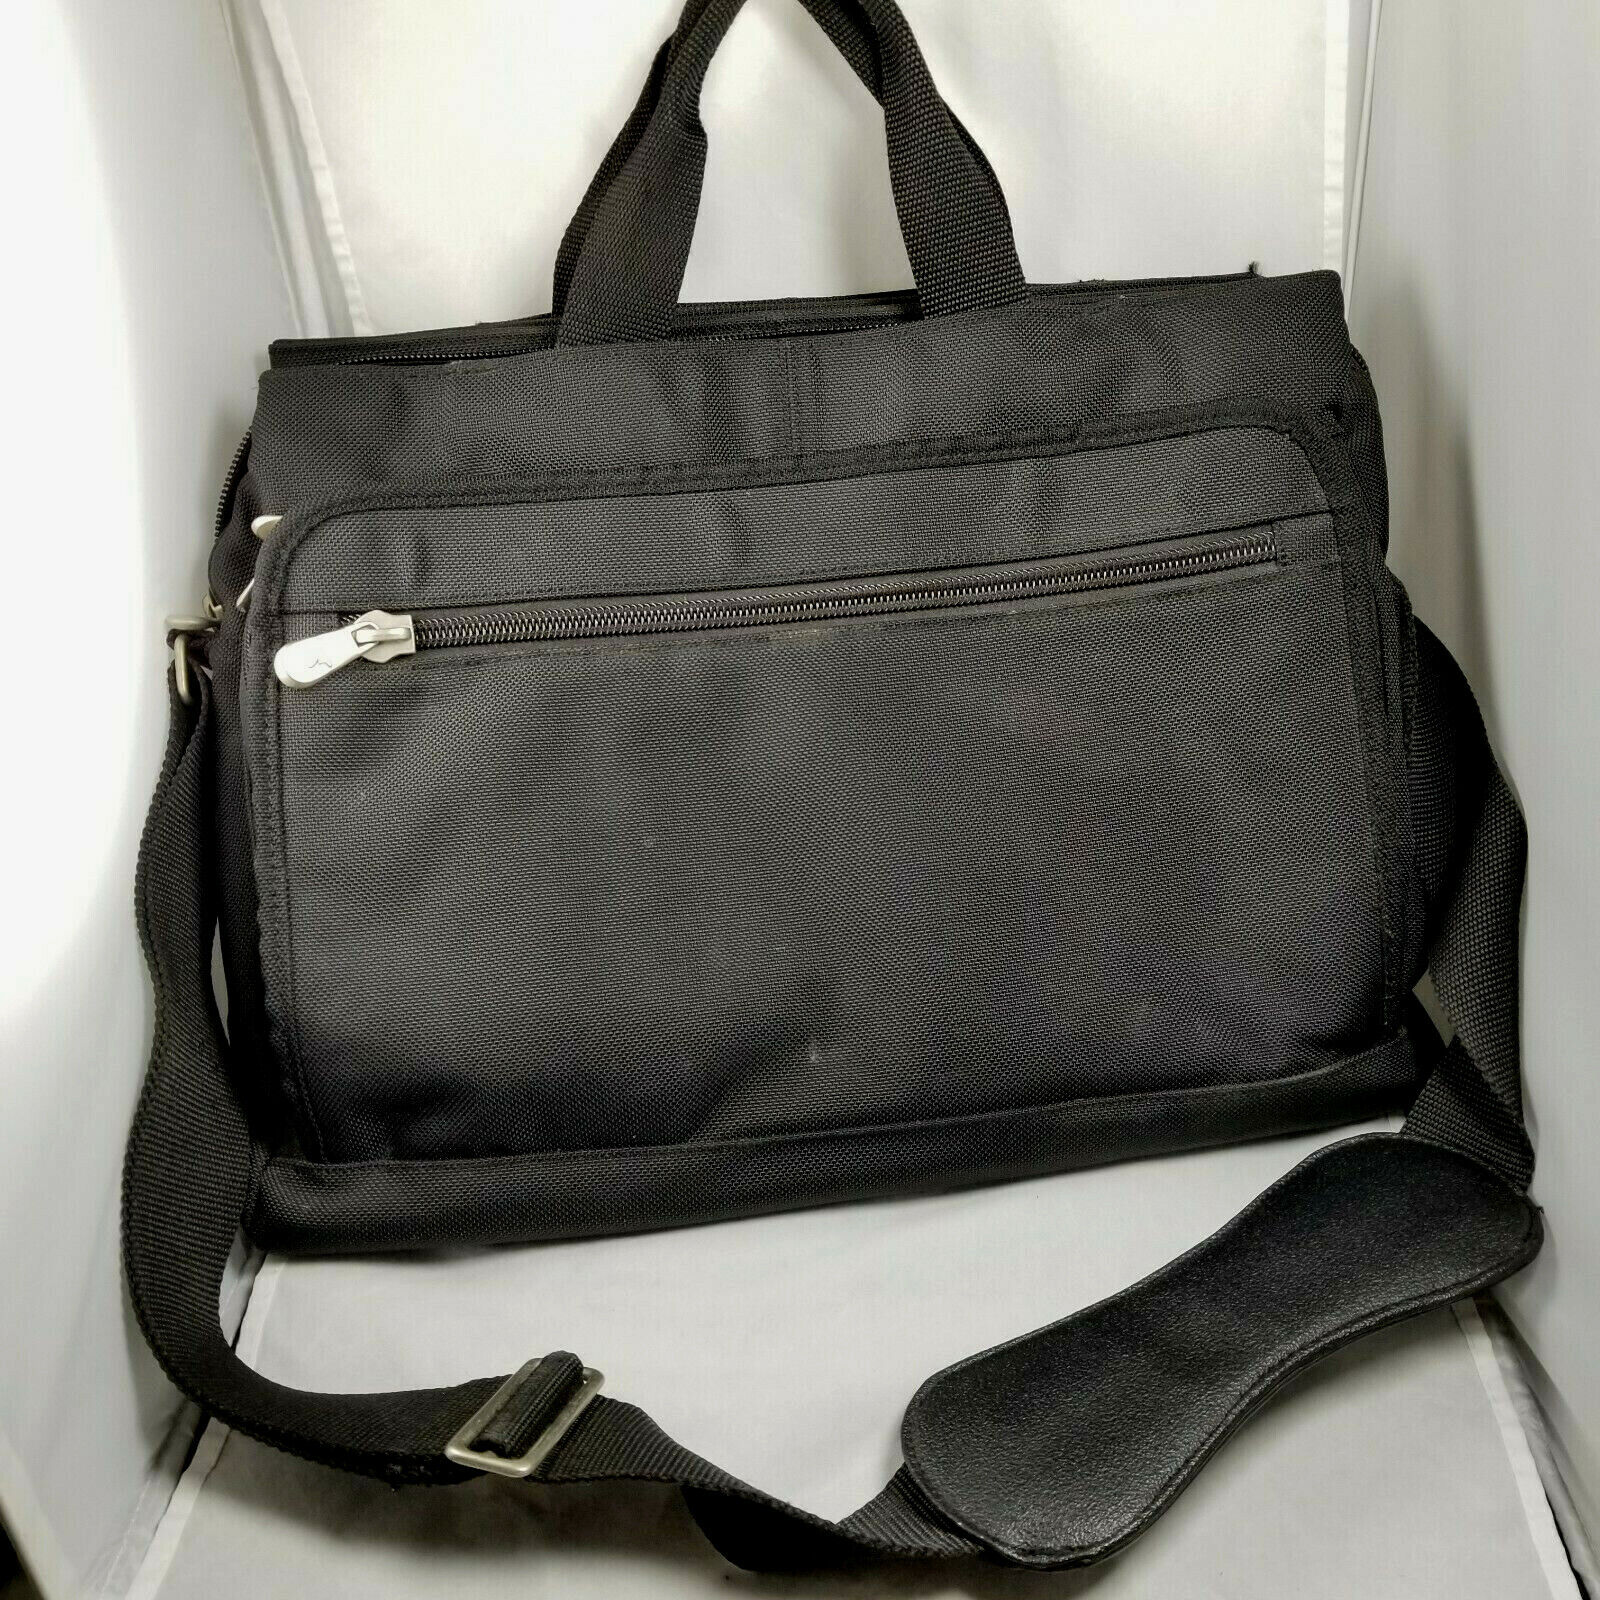 Travelon Large Heavy Duty Canvas Laptop Messenger Bag Black Shoulder Strap 